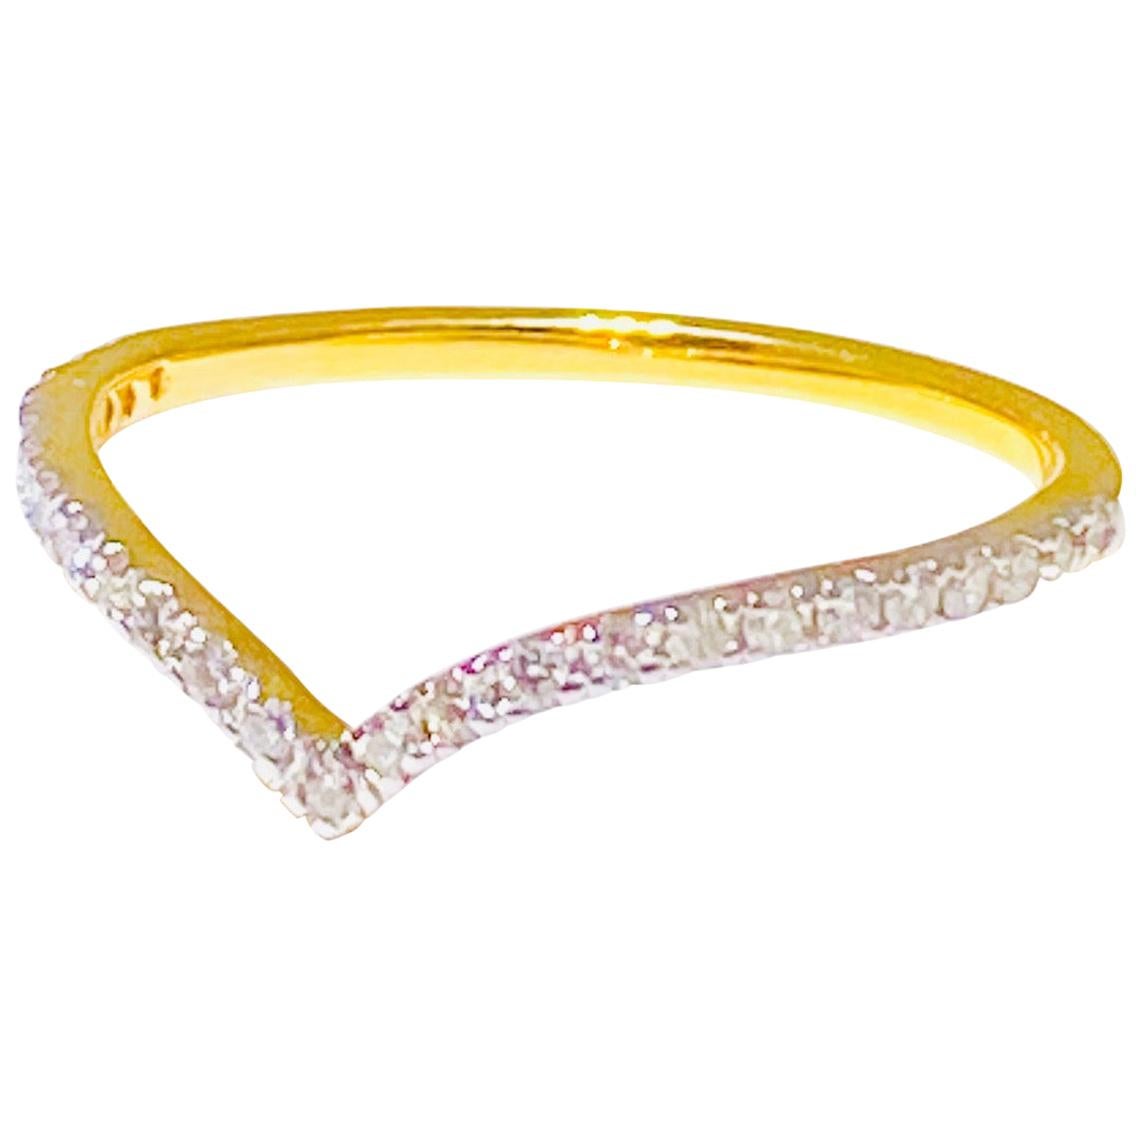 Diamond "V" Band, 18 Karat Yellow Gold Stackable Fashion Ring and Diamond Band